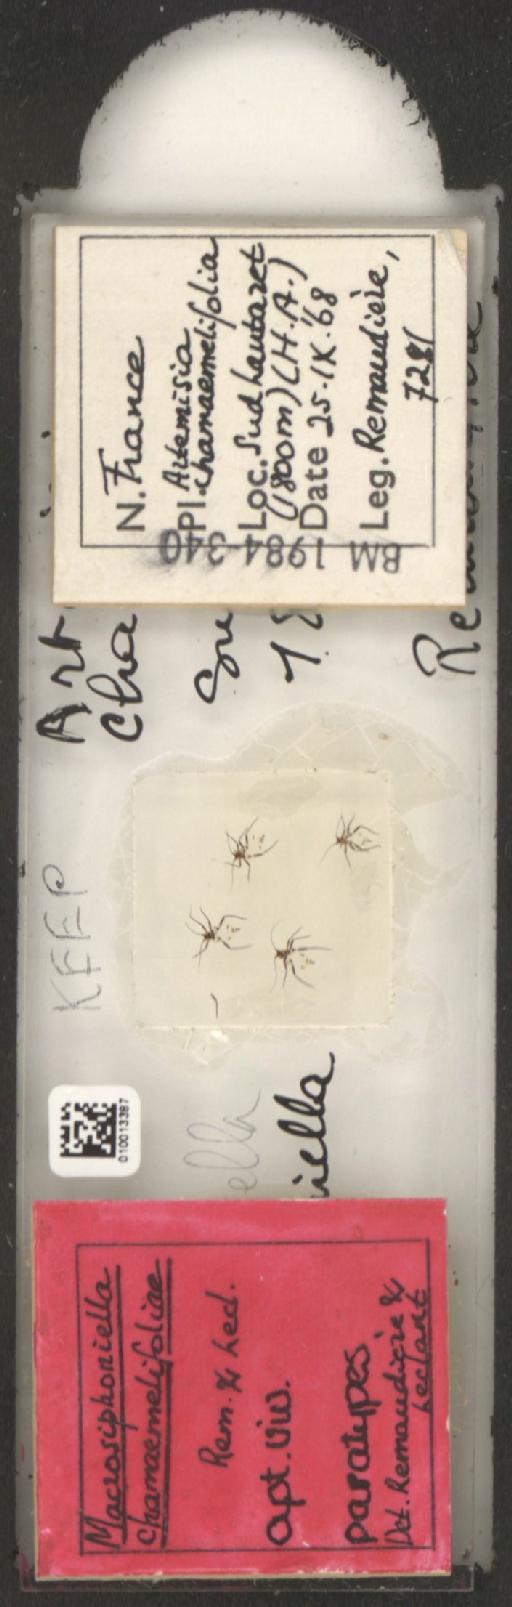 Macrosiphoniella chamaemelifoliae Remaudiere & Leclant, 1972 - 010013387_112659_1094719